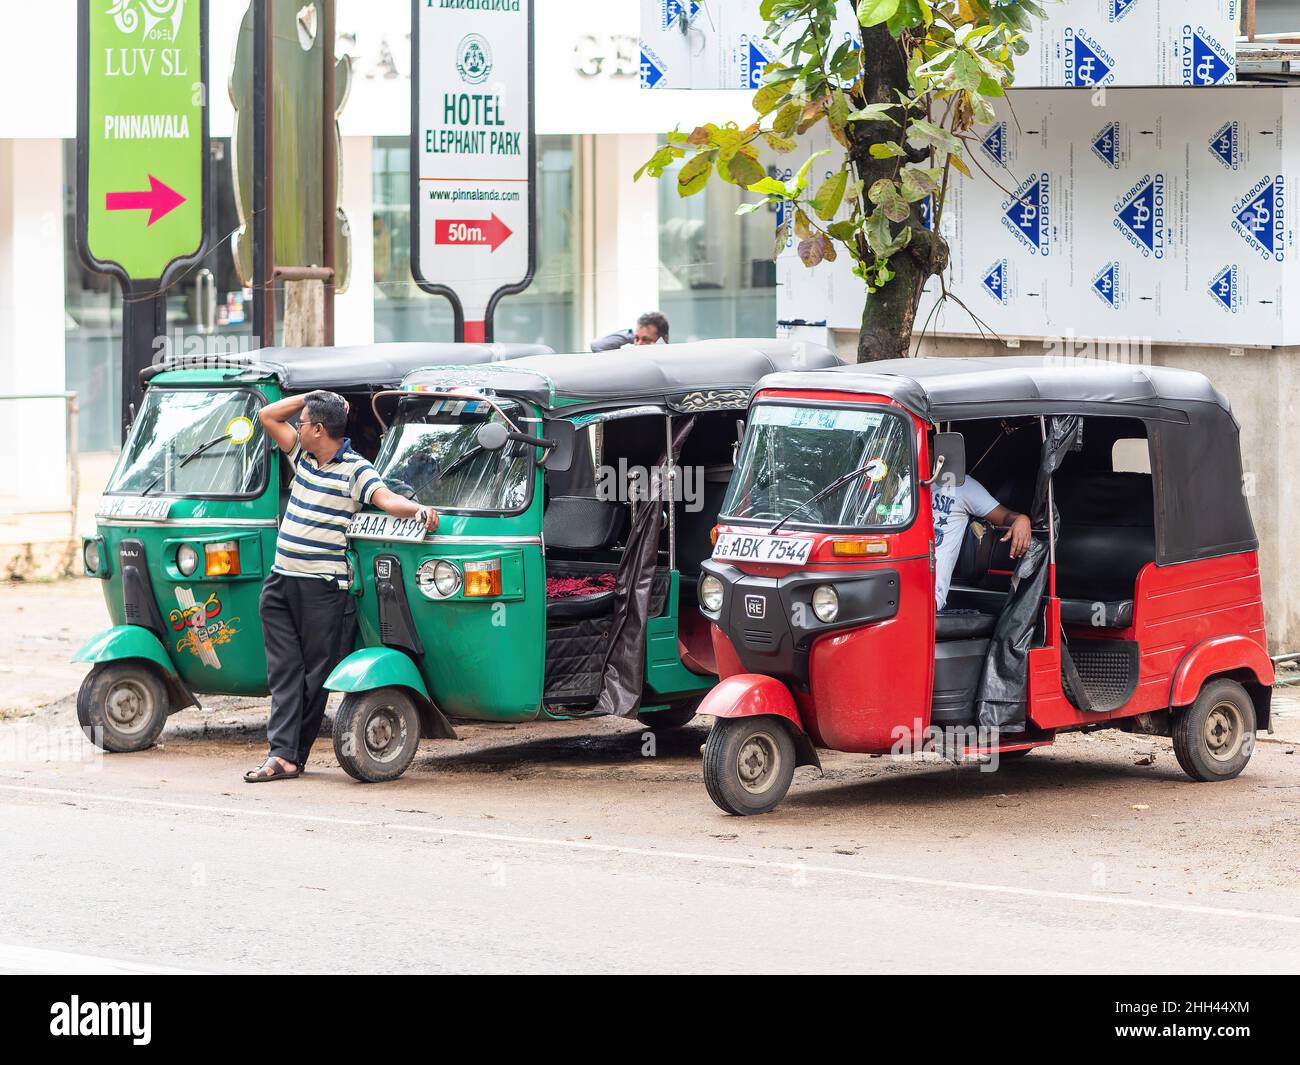 Three auto rickshaws, also called tuk-tuk, parked in Pinnawala, Sri Lanka Stock Photo